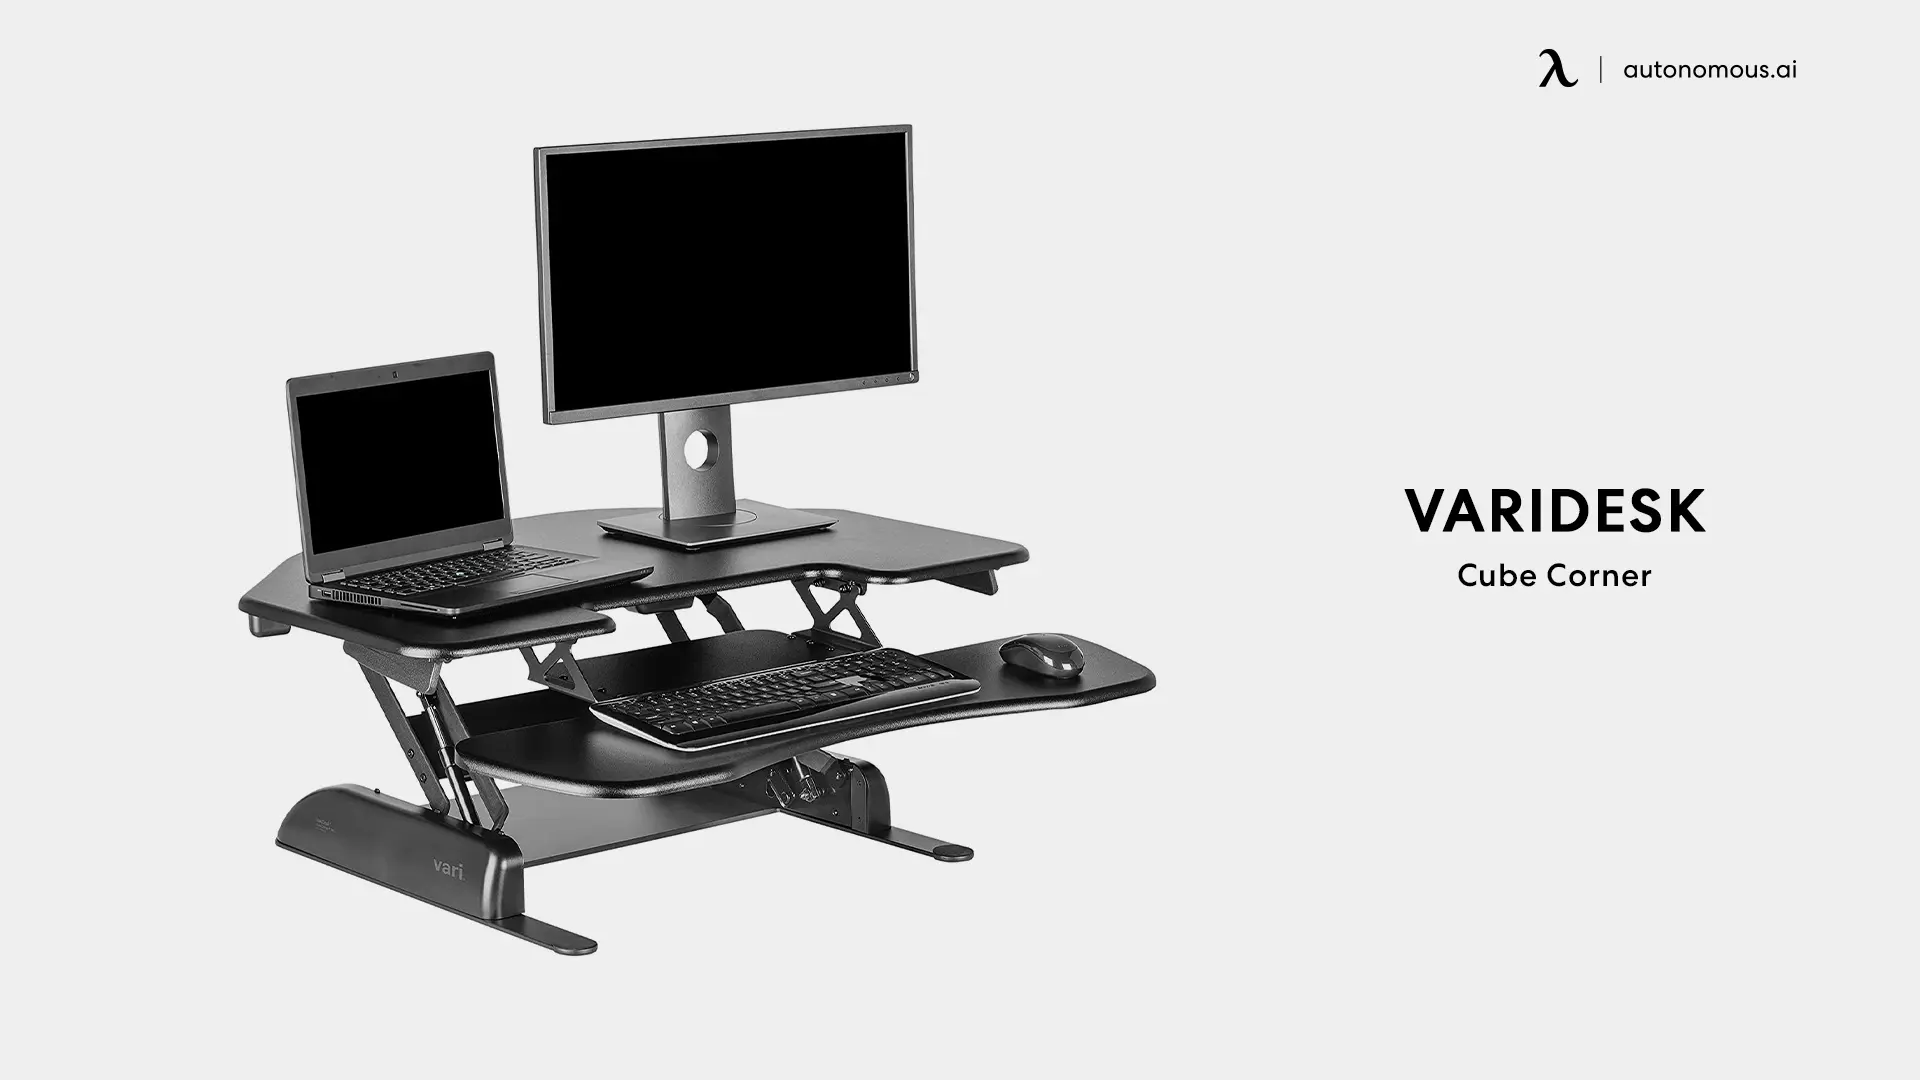 VariDesk Cube corner desk keyboard tray